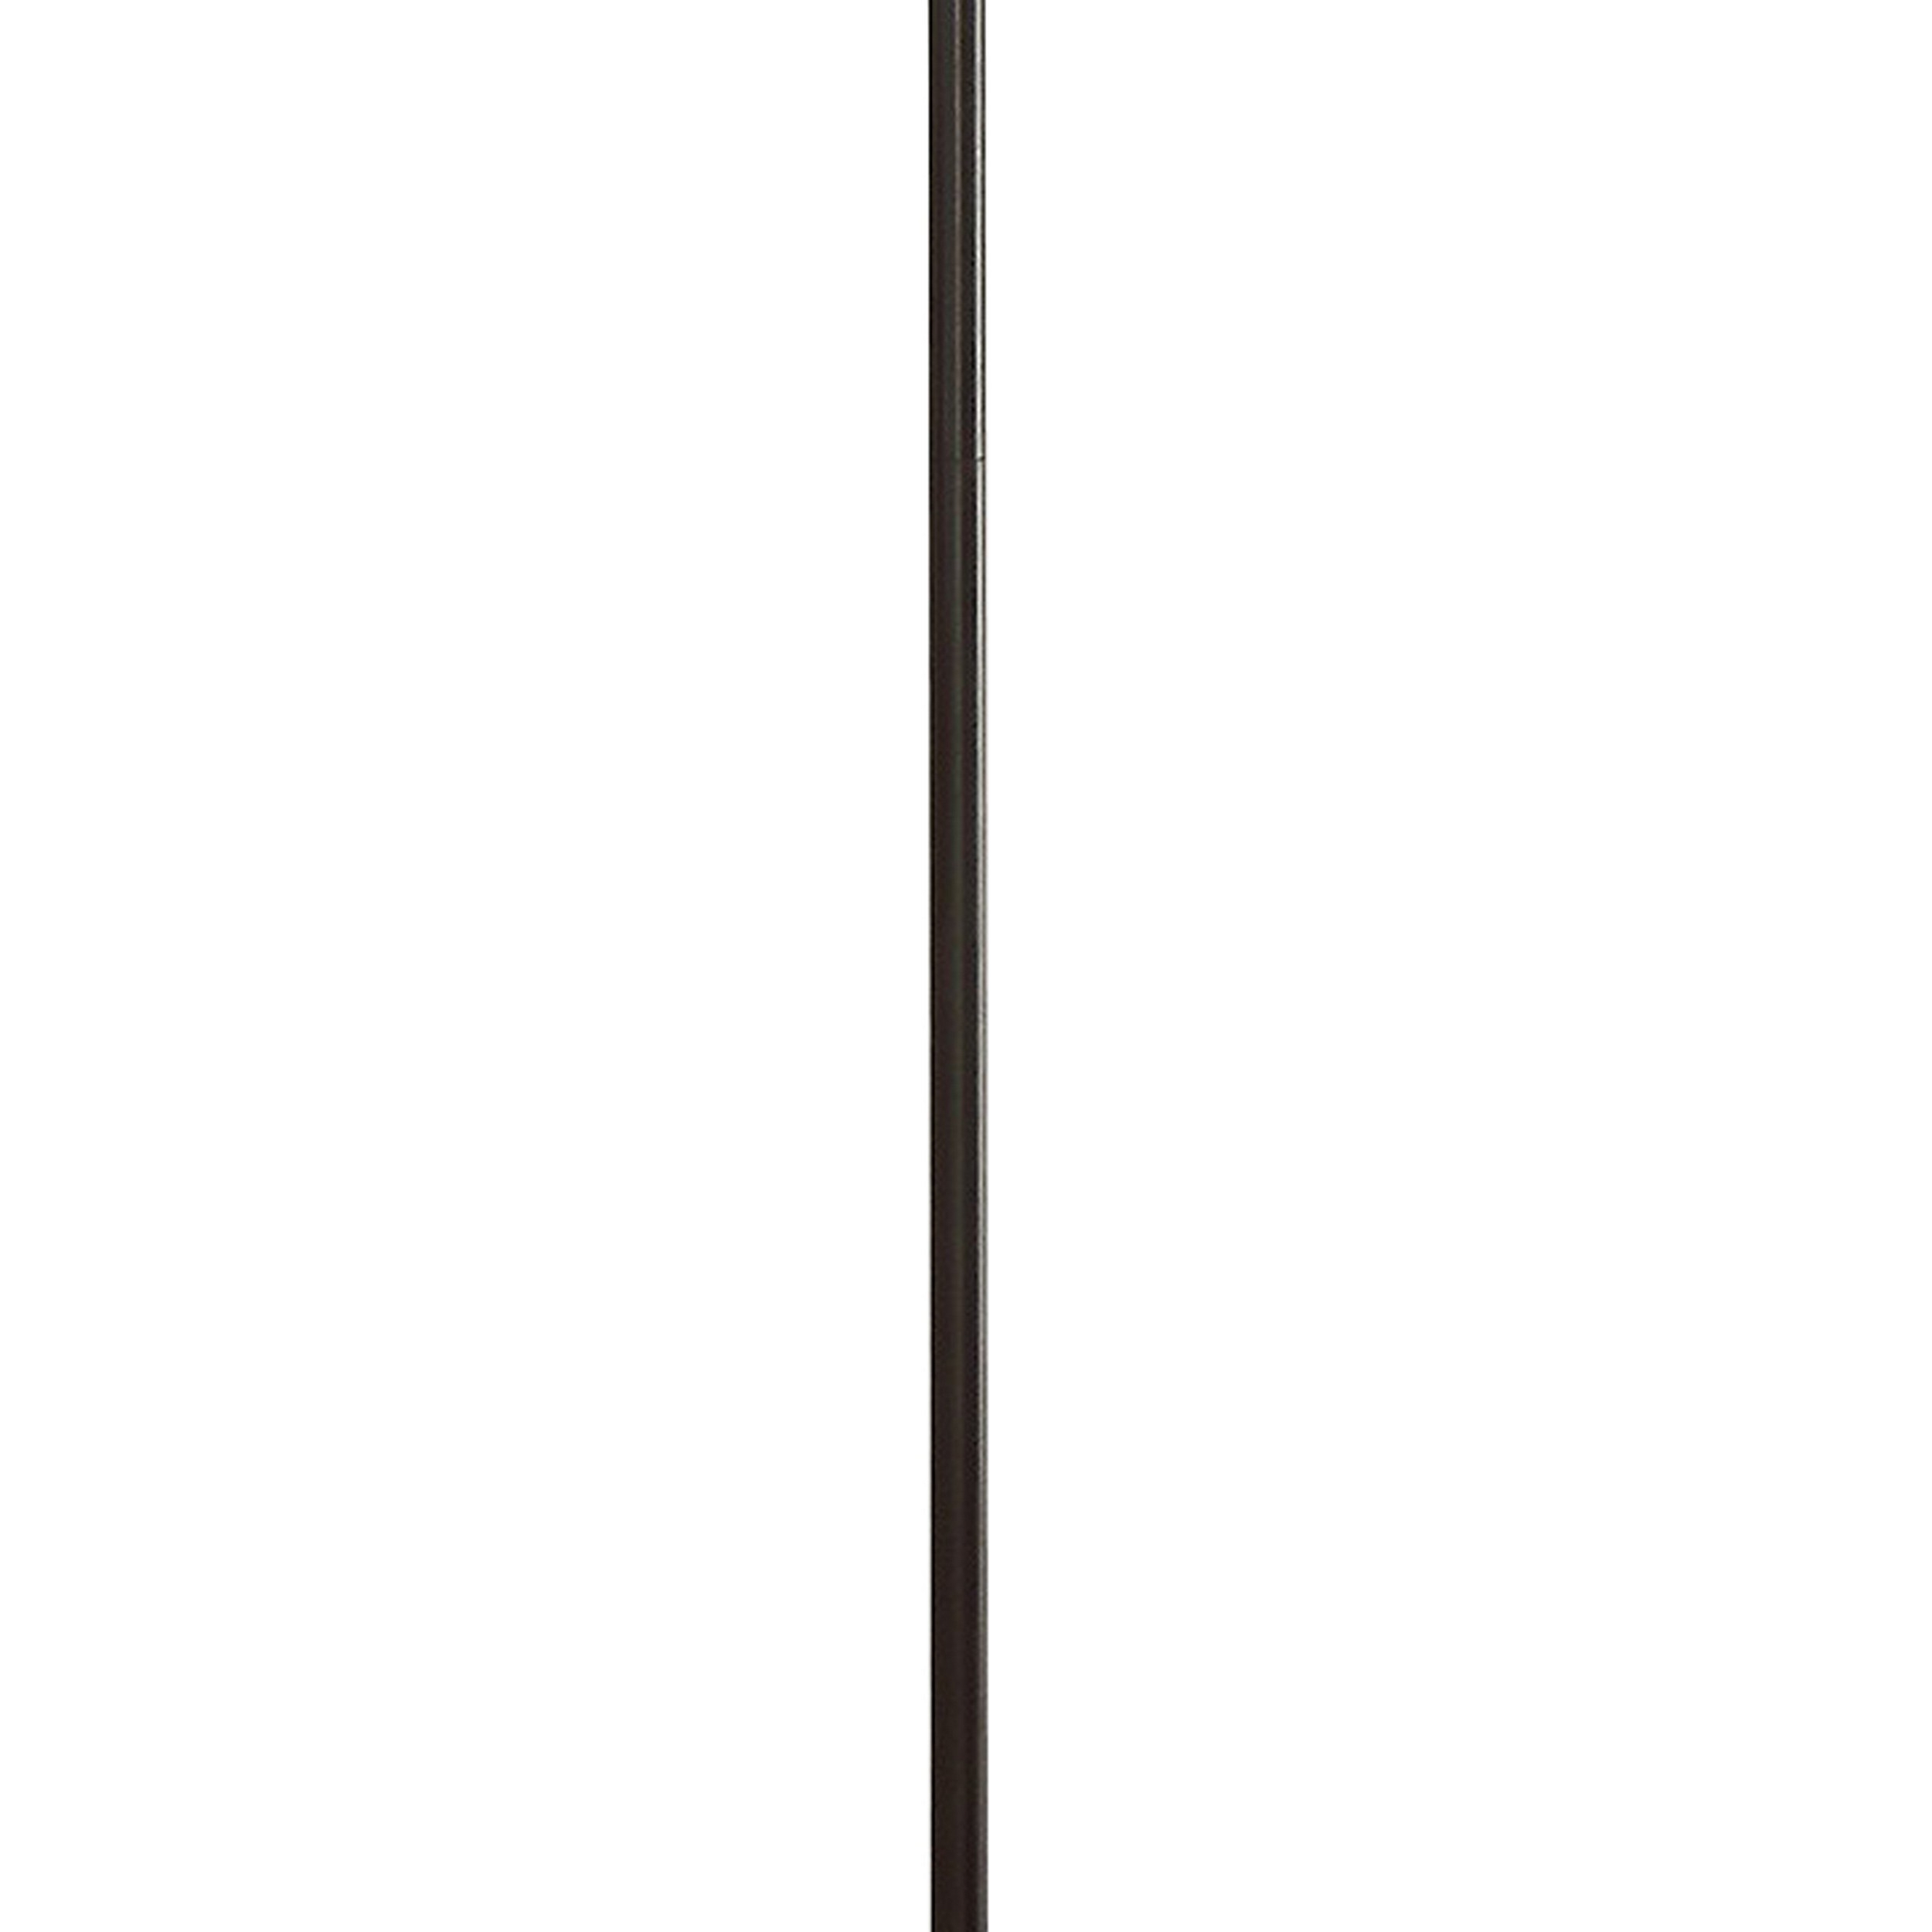 Quinn 63 Inch Accent Floor Lamp, Vintage Fan Design, Antique Bronze Finish -Saltoro Sherpi